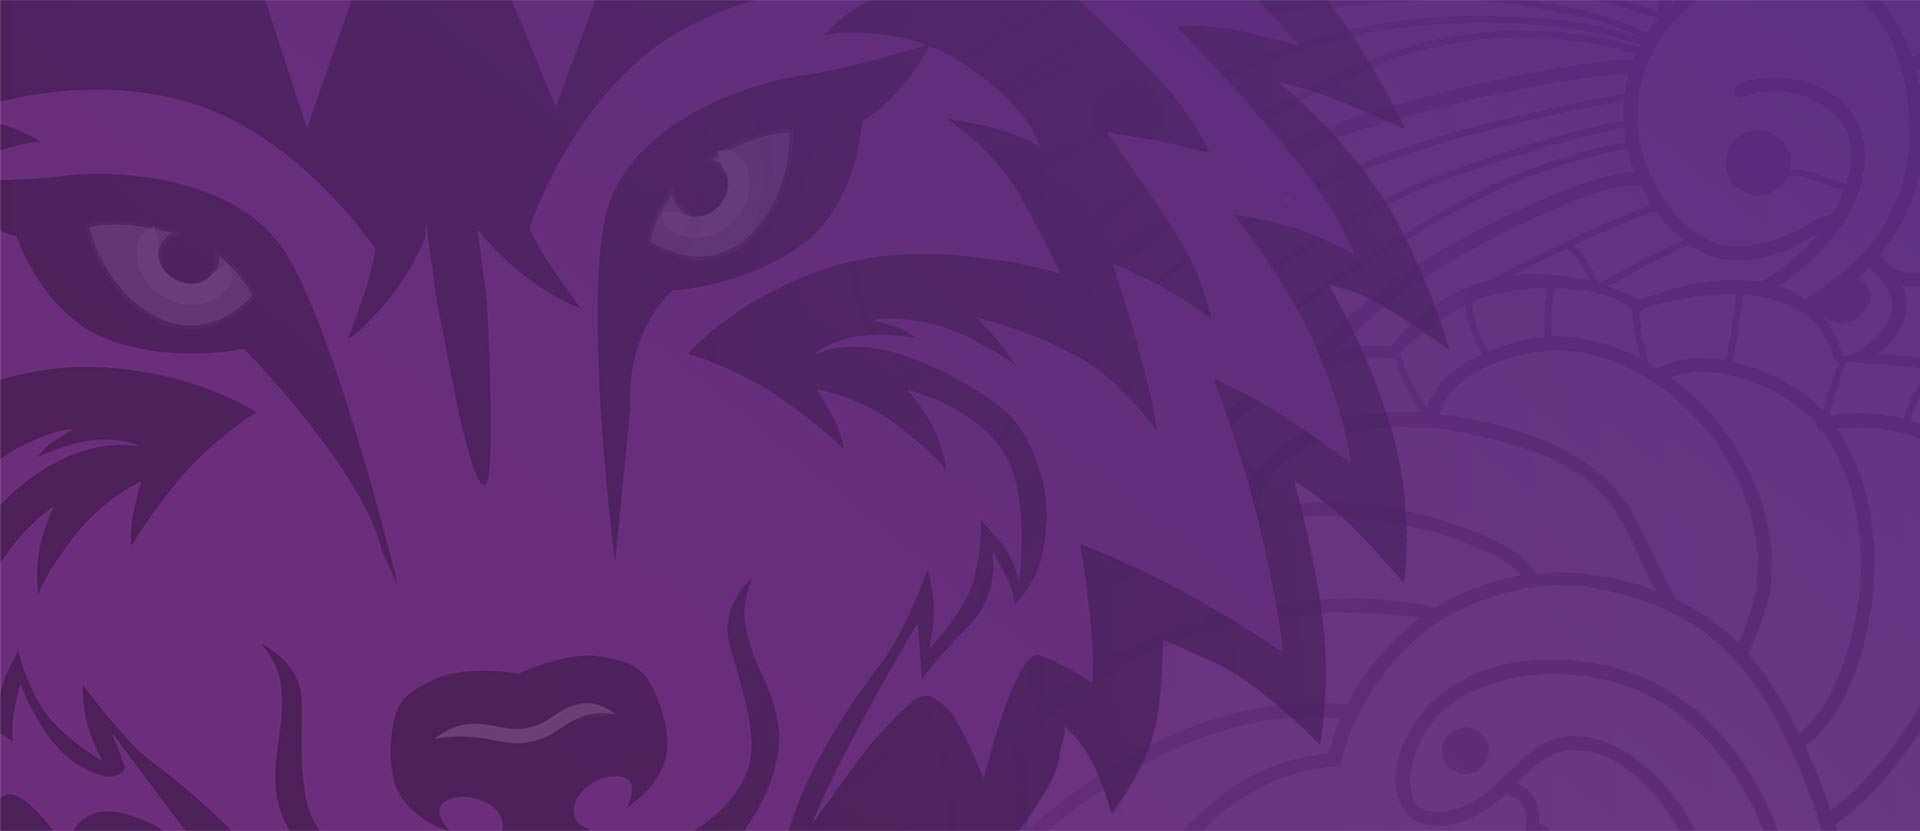 Wolf with purple overlay